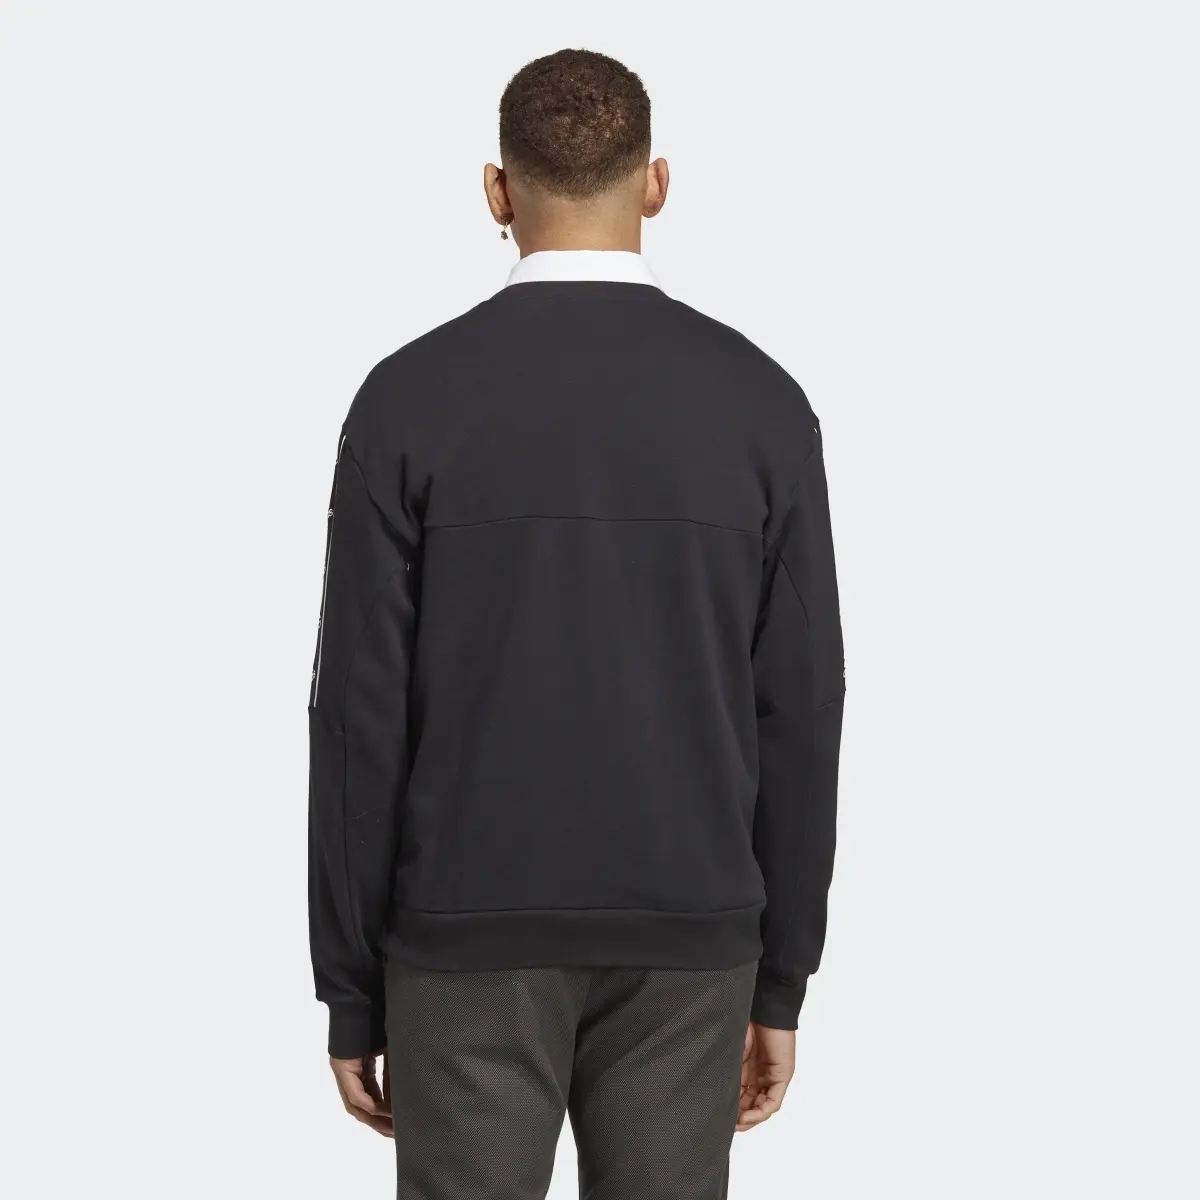 Adidas Brand Love Sweatshirt. 3